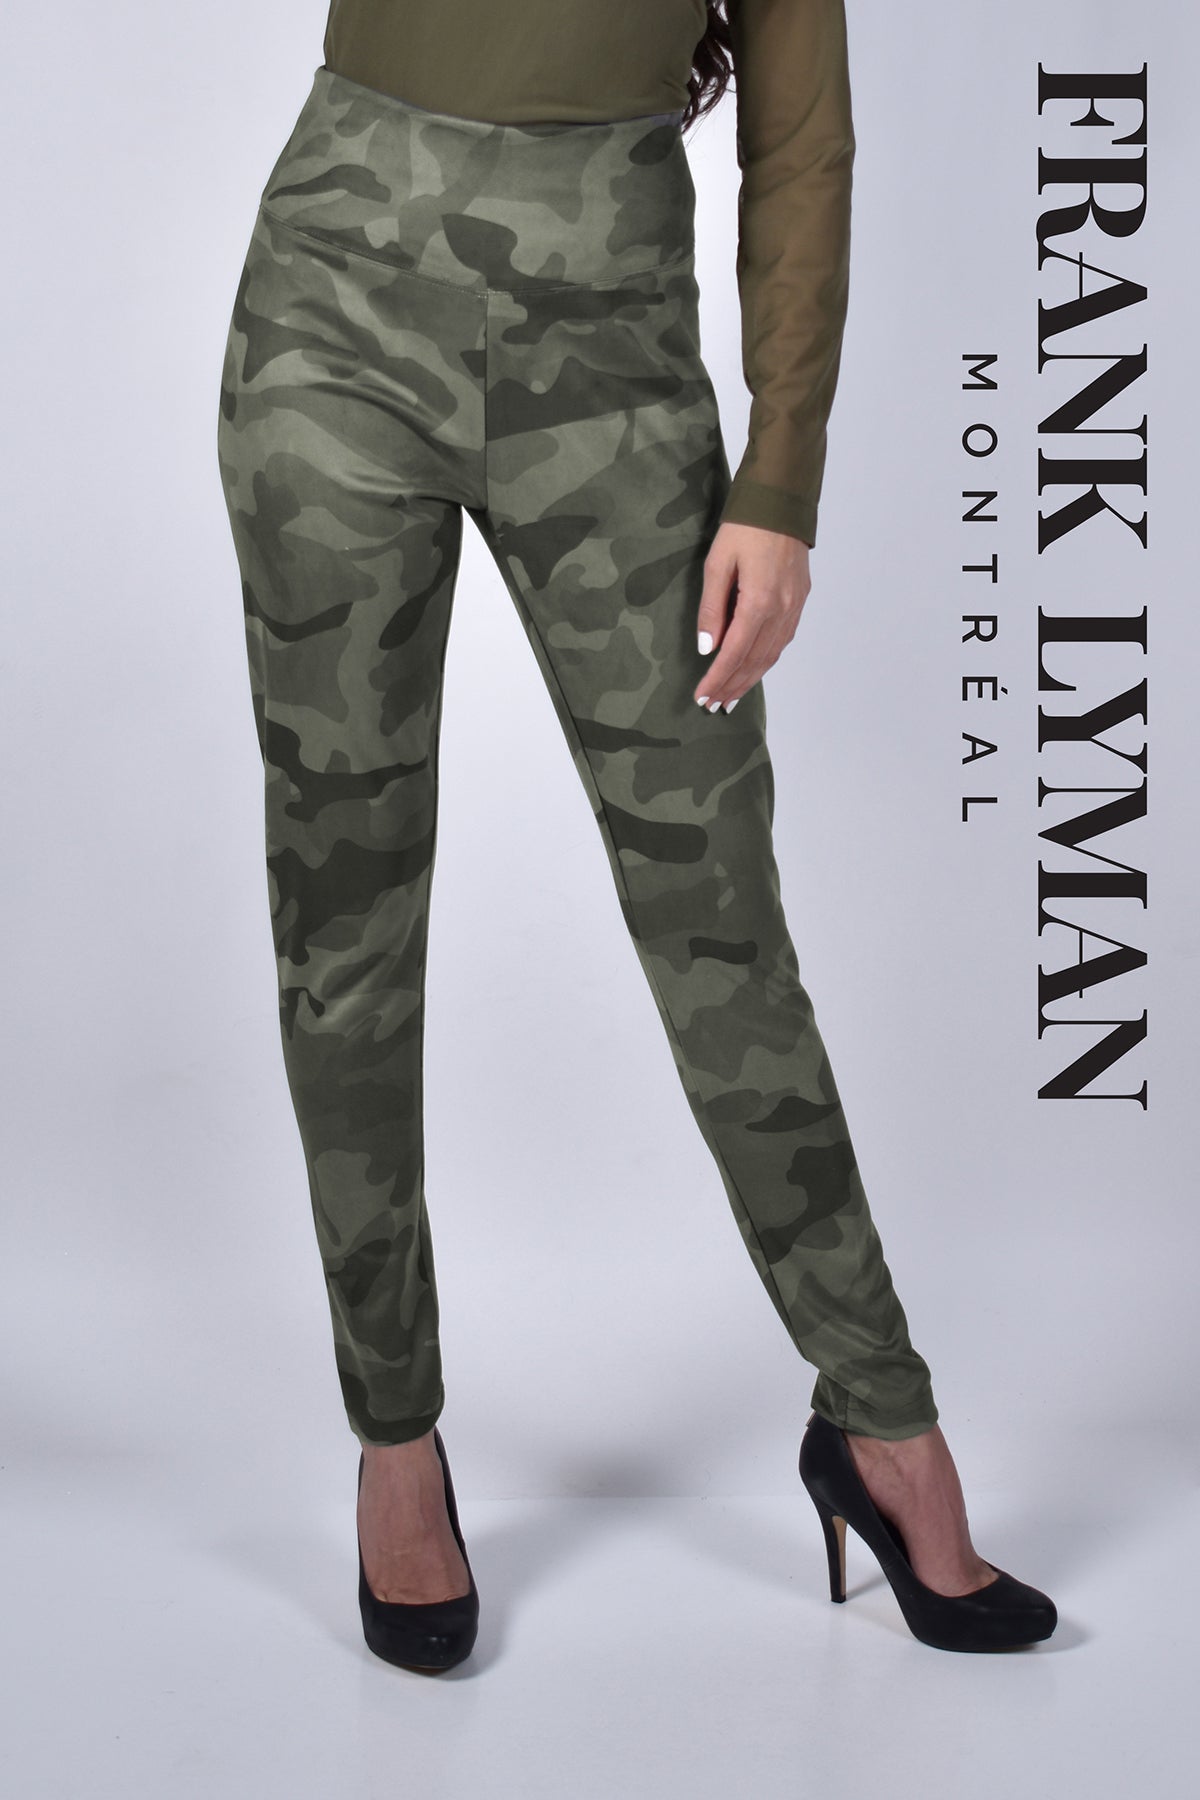 Frank Lyman Montreal Jeans-Frank Lyman Montreal Pants-Buy Frank Lyman Clothing Online-Frank Lyman Montreal Online Shop-Frank Lyman Montreal Sweaters